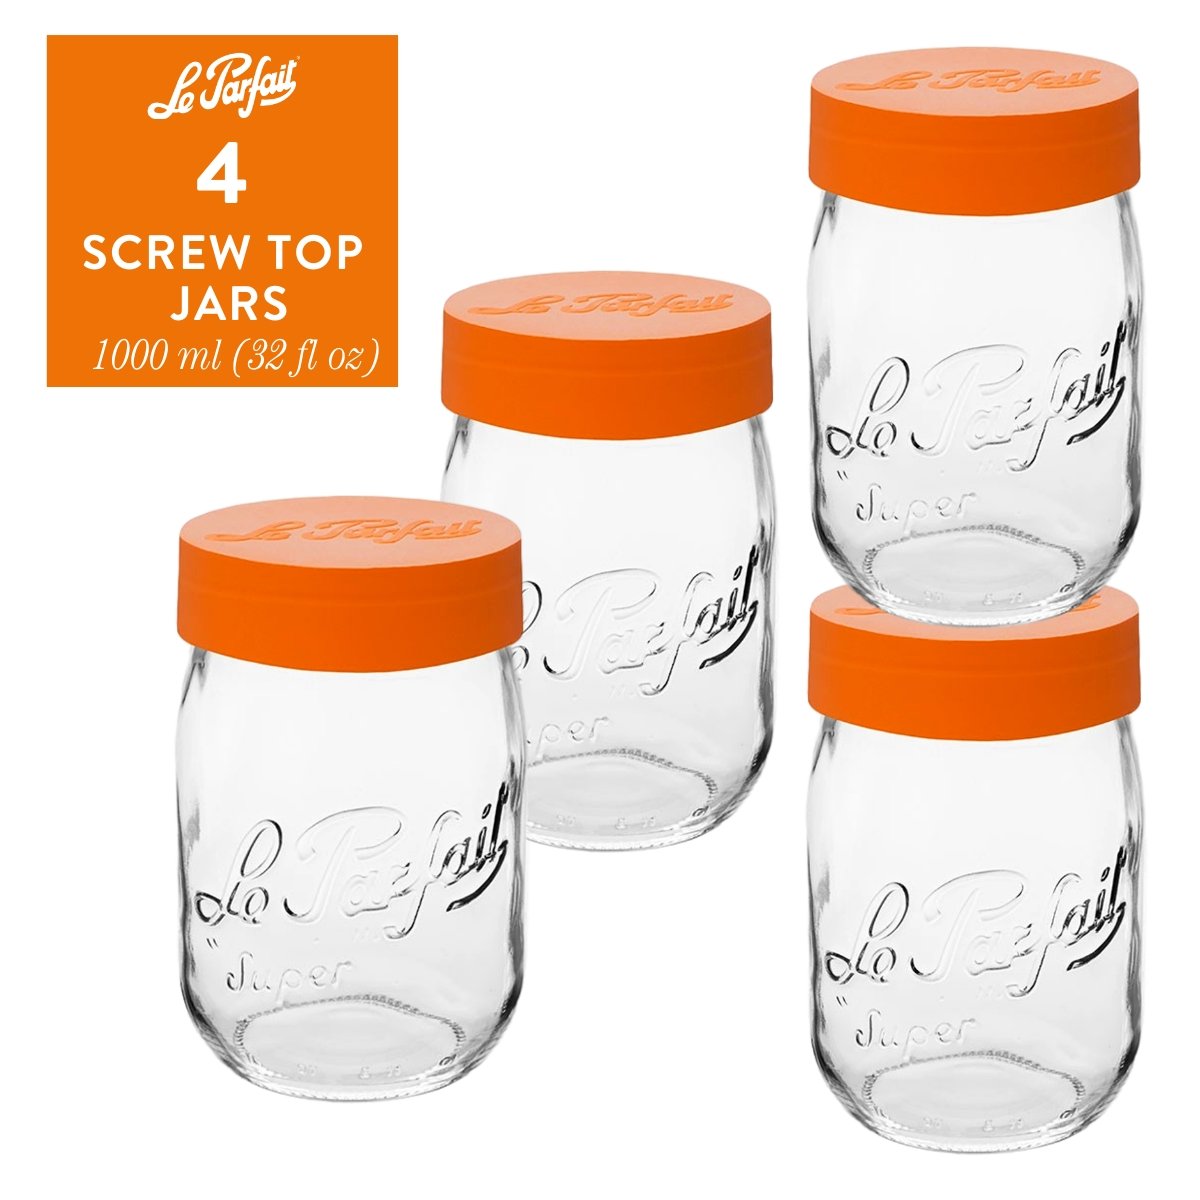 Le Parfait Screw Top Jars – Large French Glass Jars For Pantry Storage  Preserving Bulk Goods, 3 pk MIX / 96 fl oz - Kroger